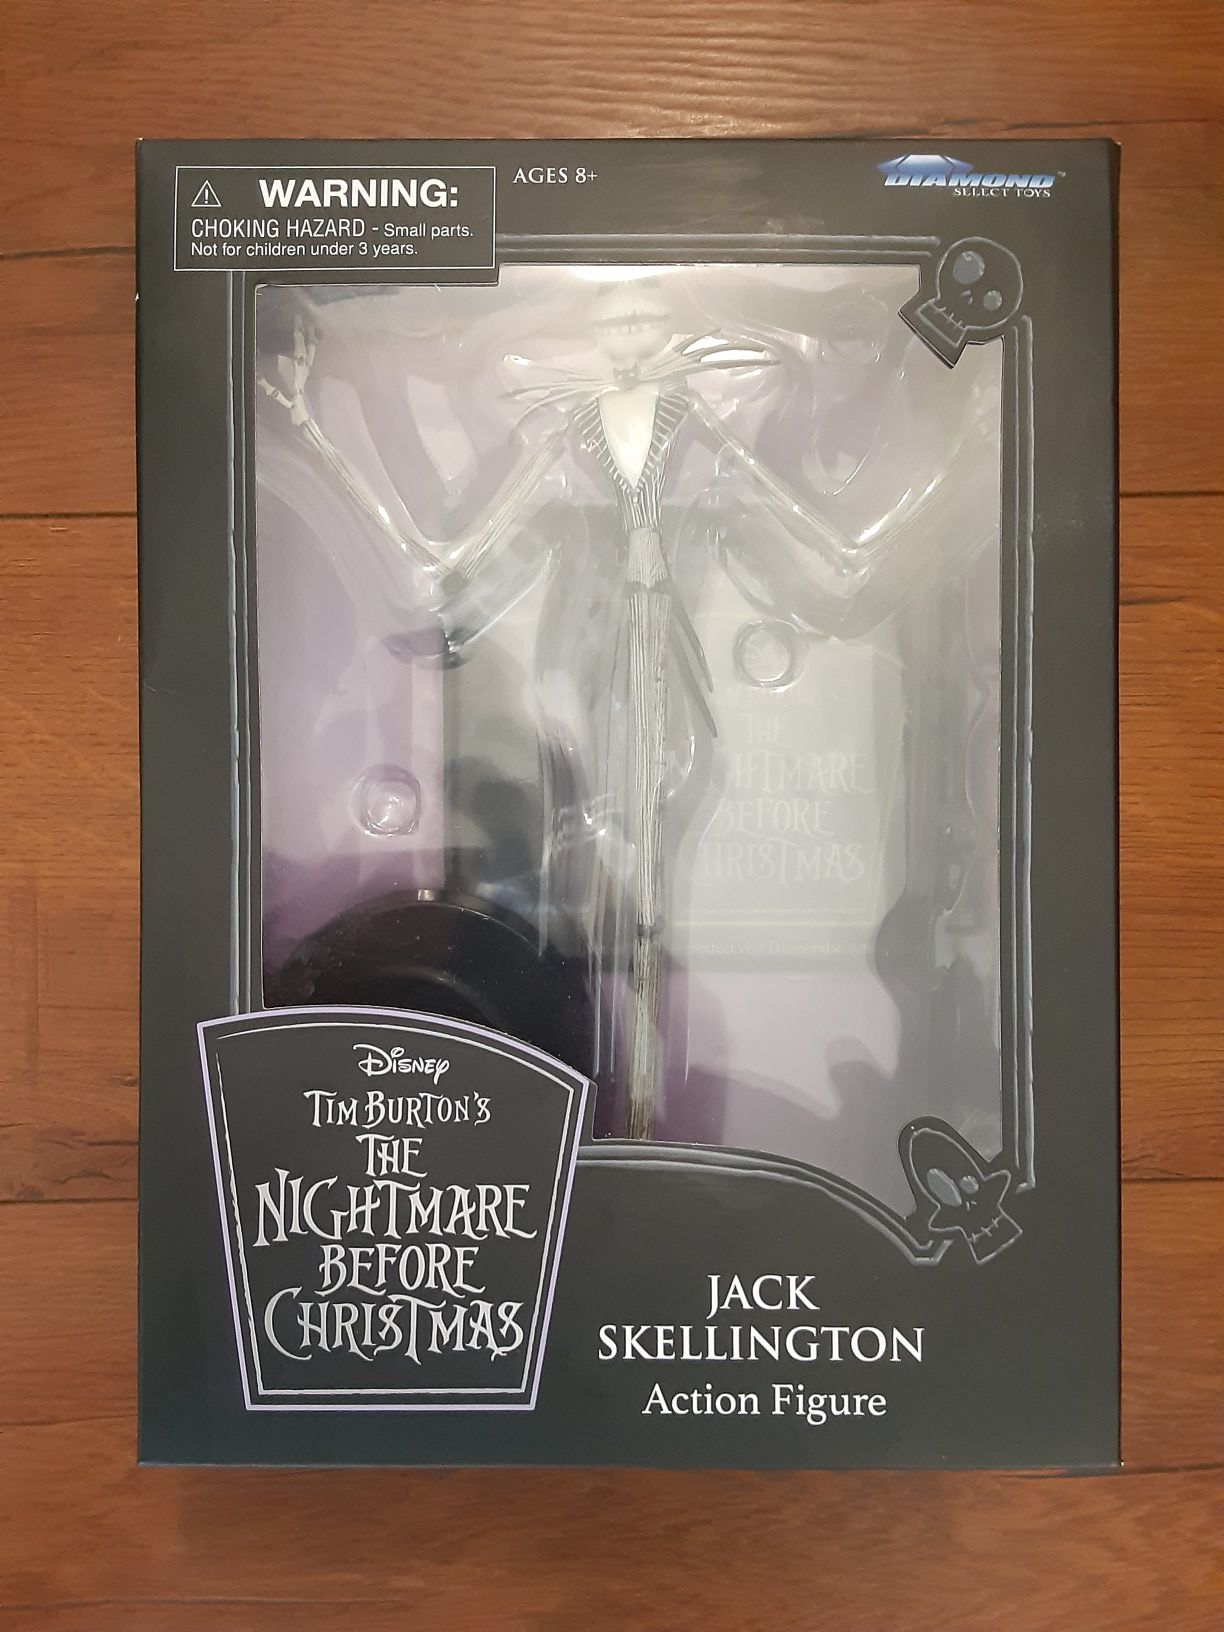 Diamond select The Nightmare Before Christmas Disney Jack Skellington action figure